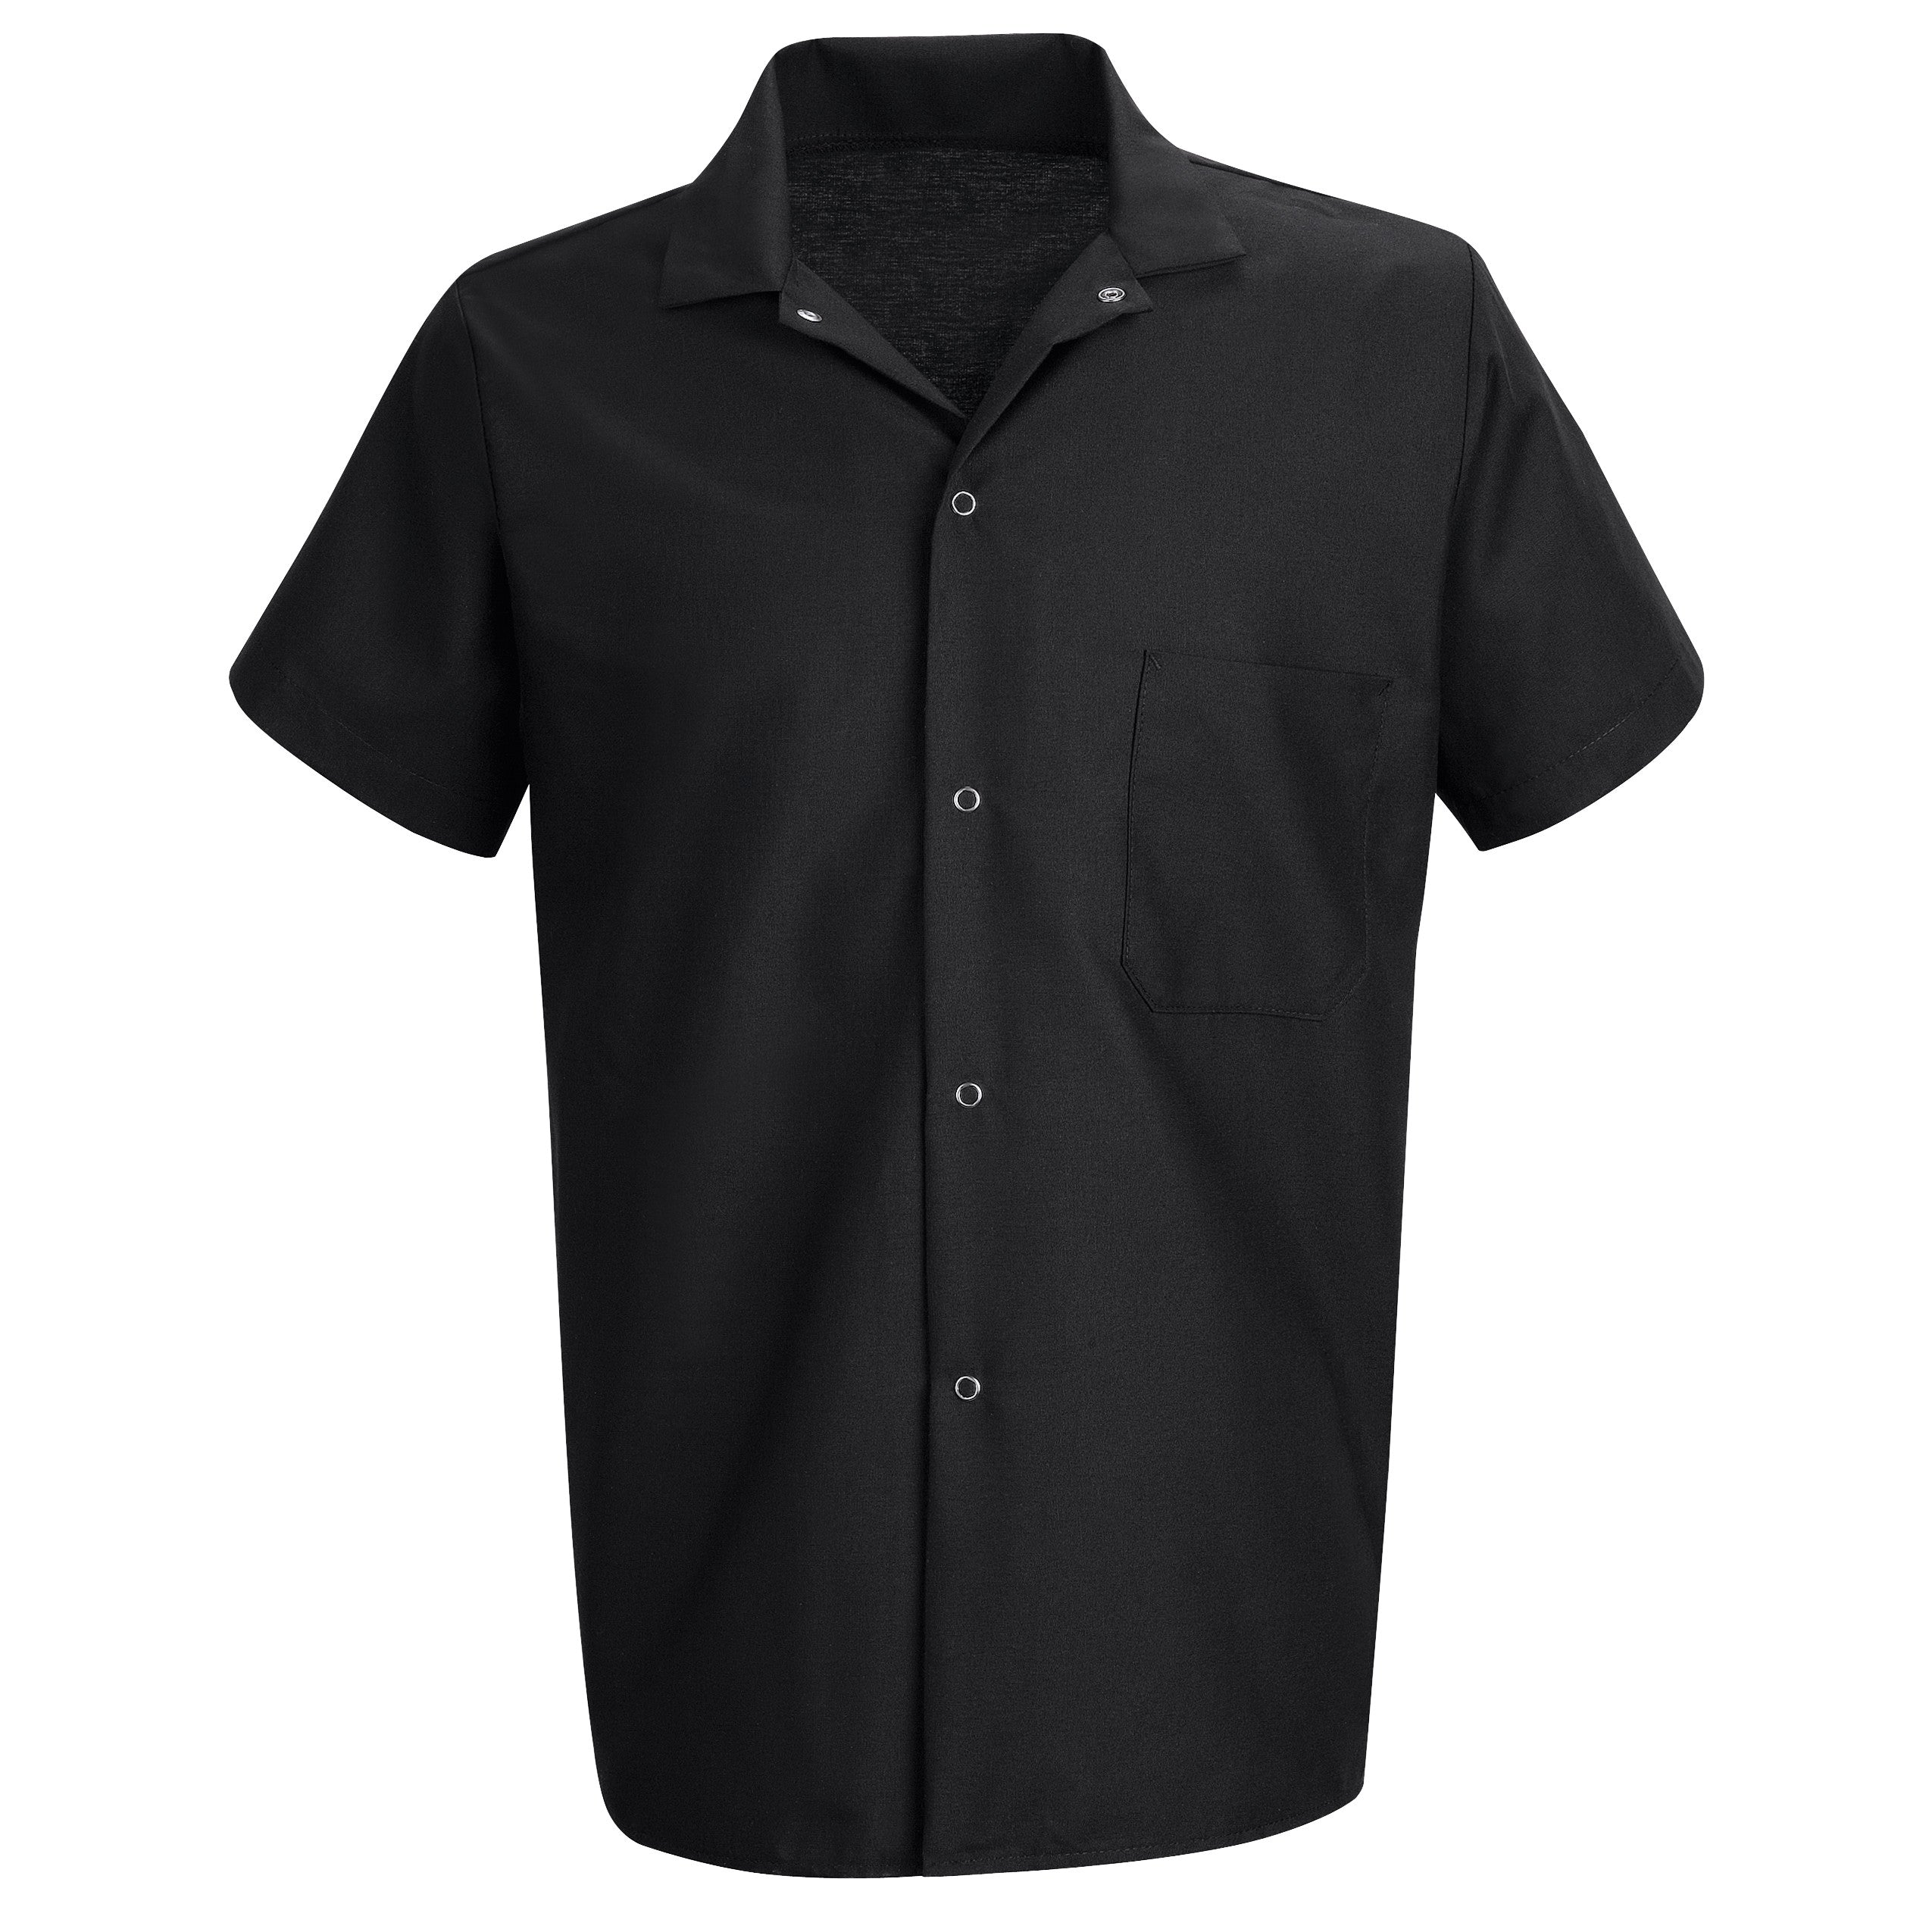 Cook Shirt 5020 - Black-eSafety Supplies, Inc